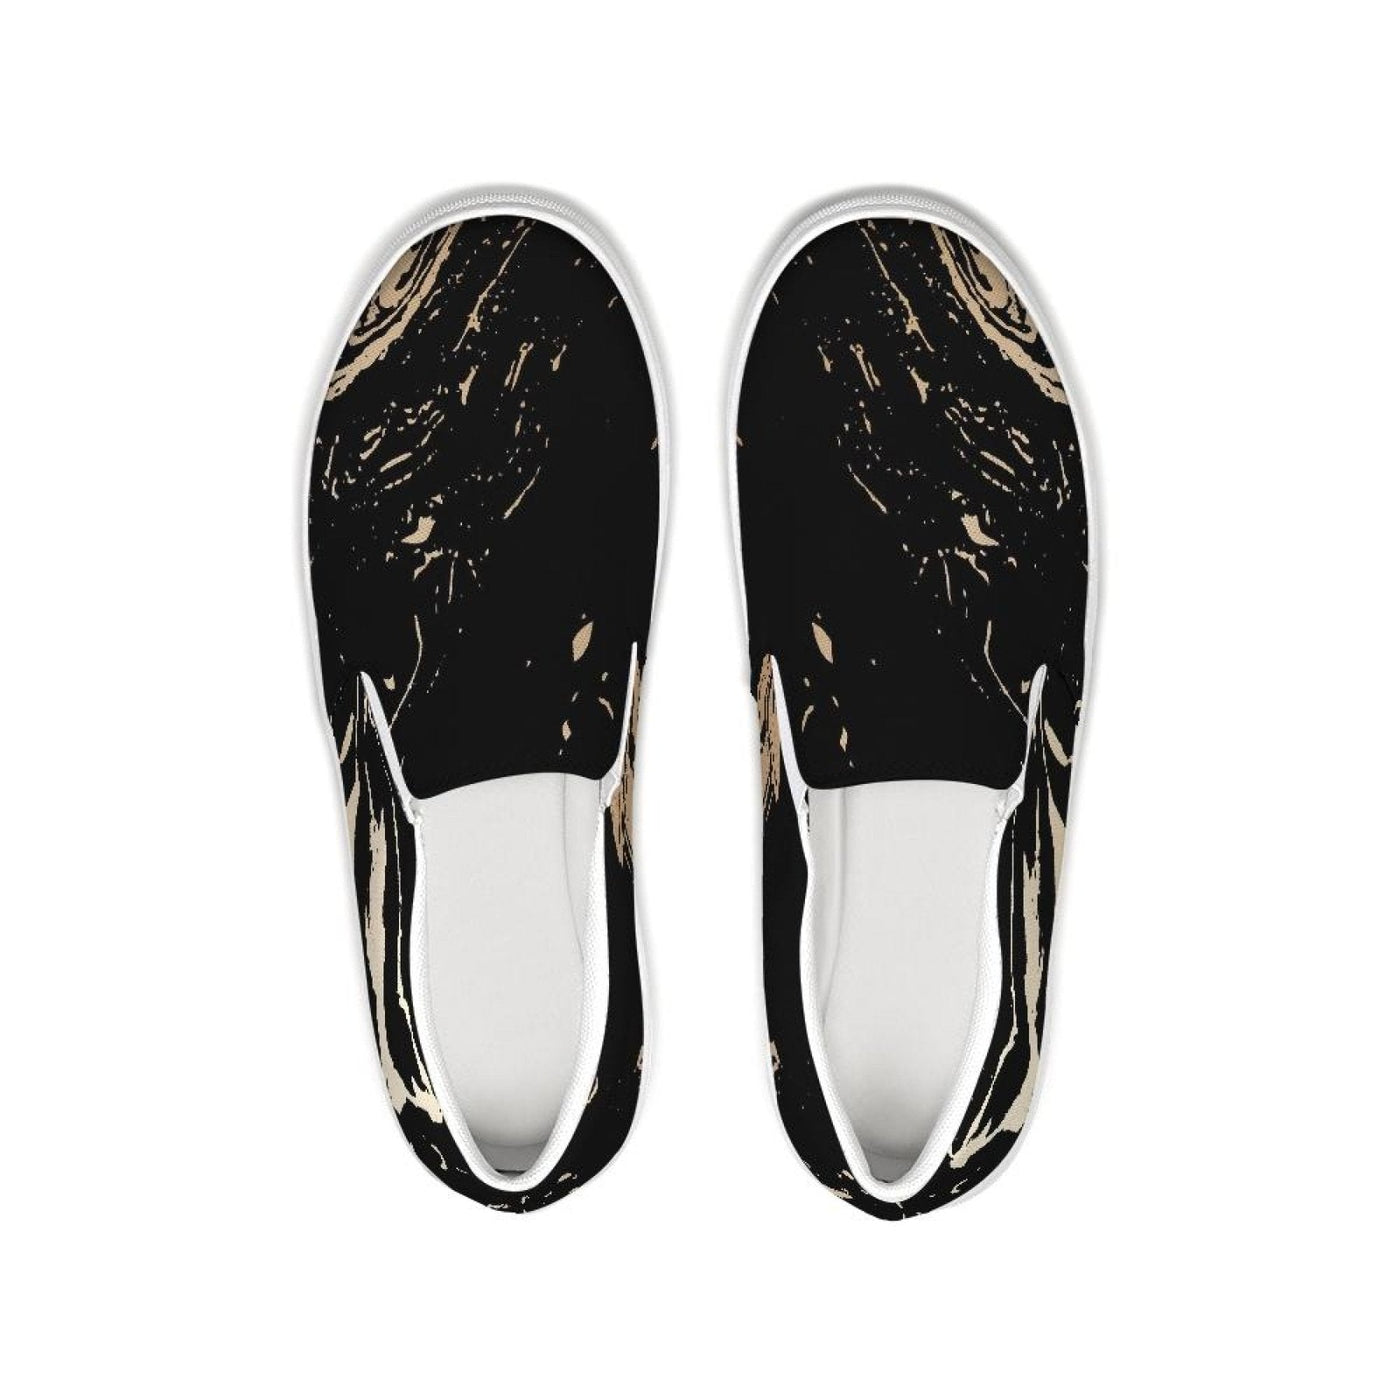 Womens Sneakers - Black & Beige Swirl Style Low Top Slip-on Canvas Shoes -